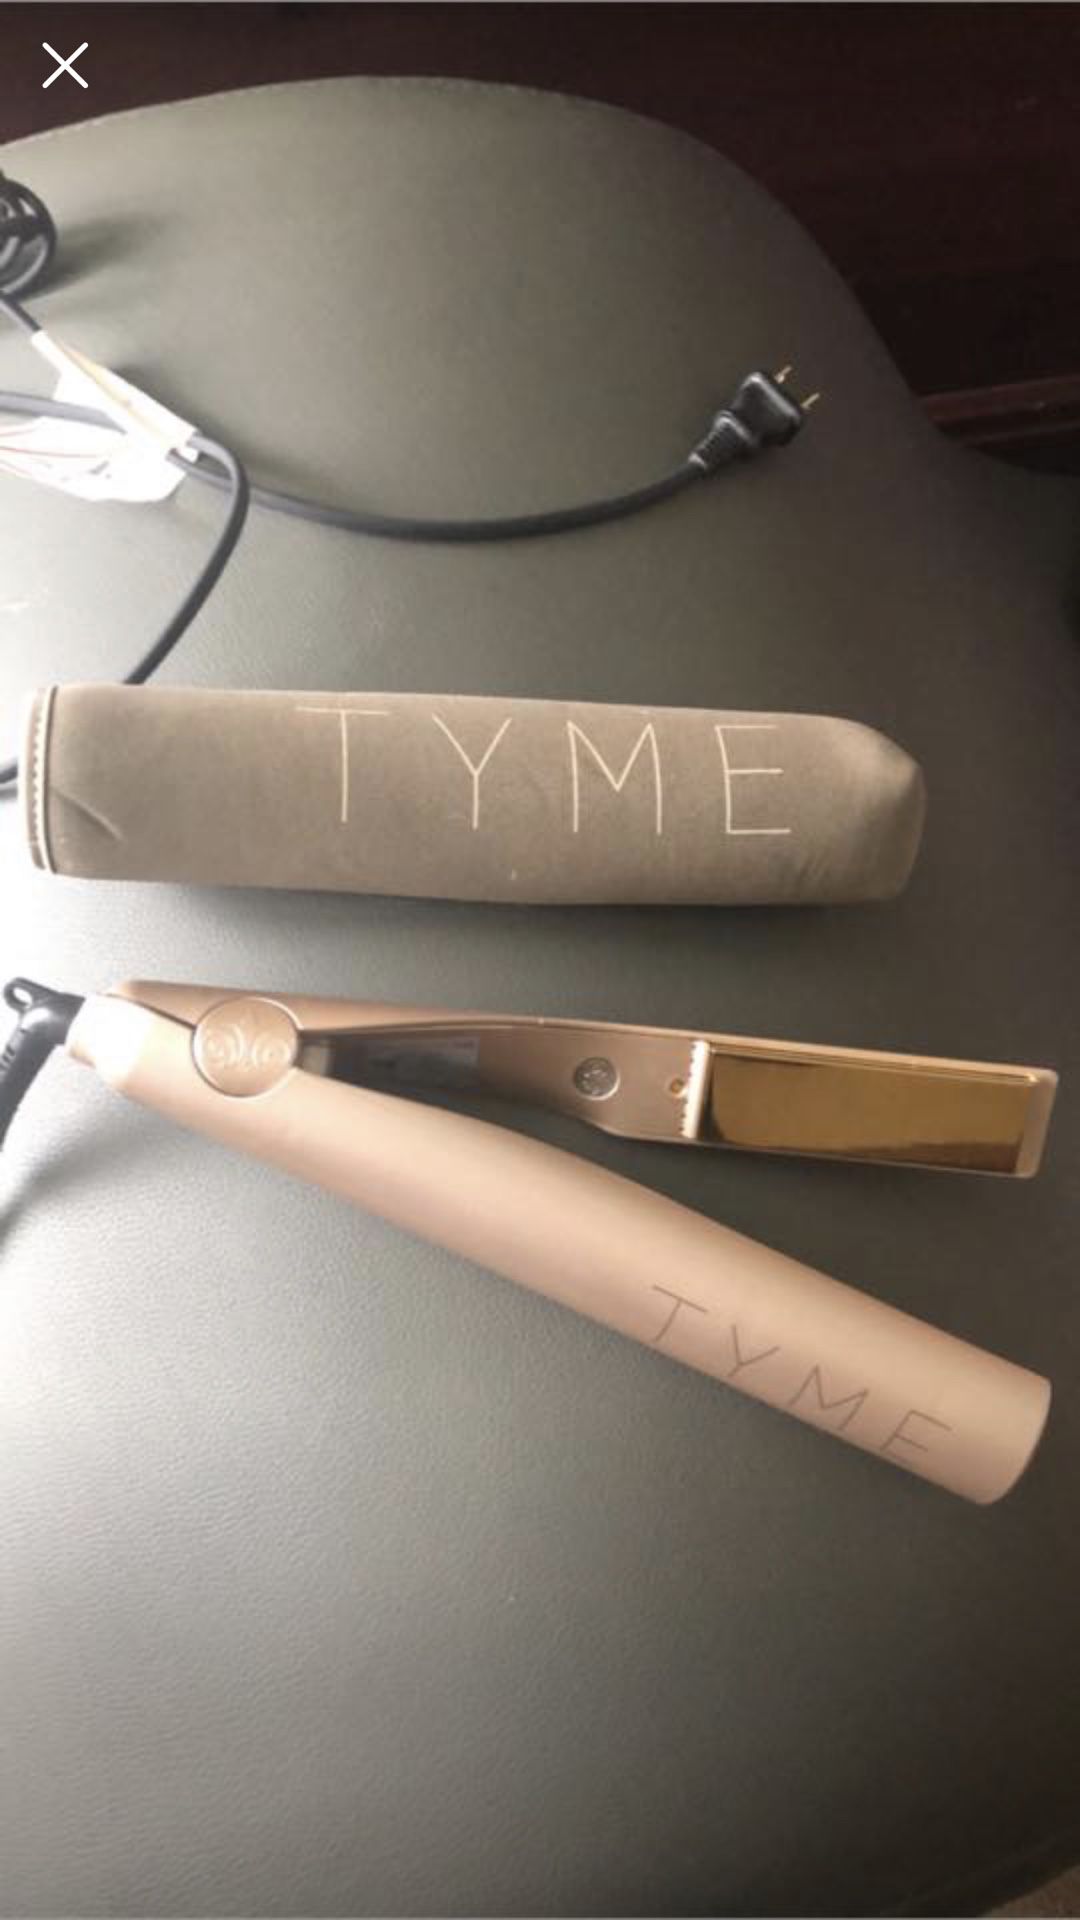 Tyme hair straightener/curler